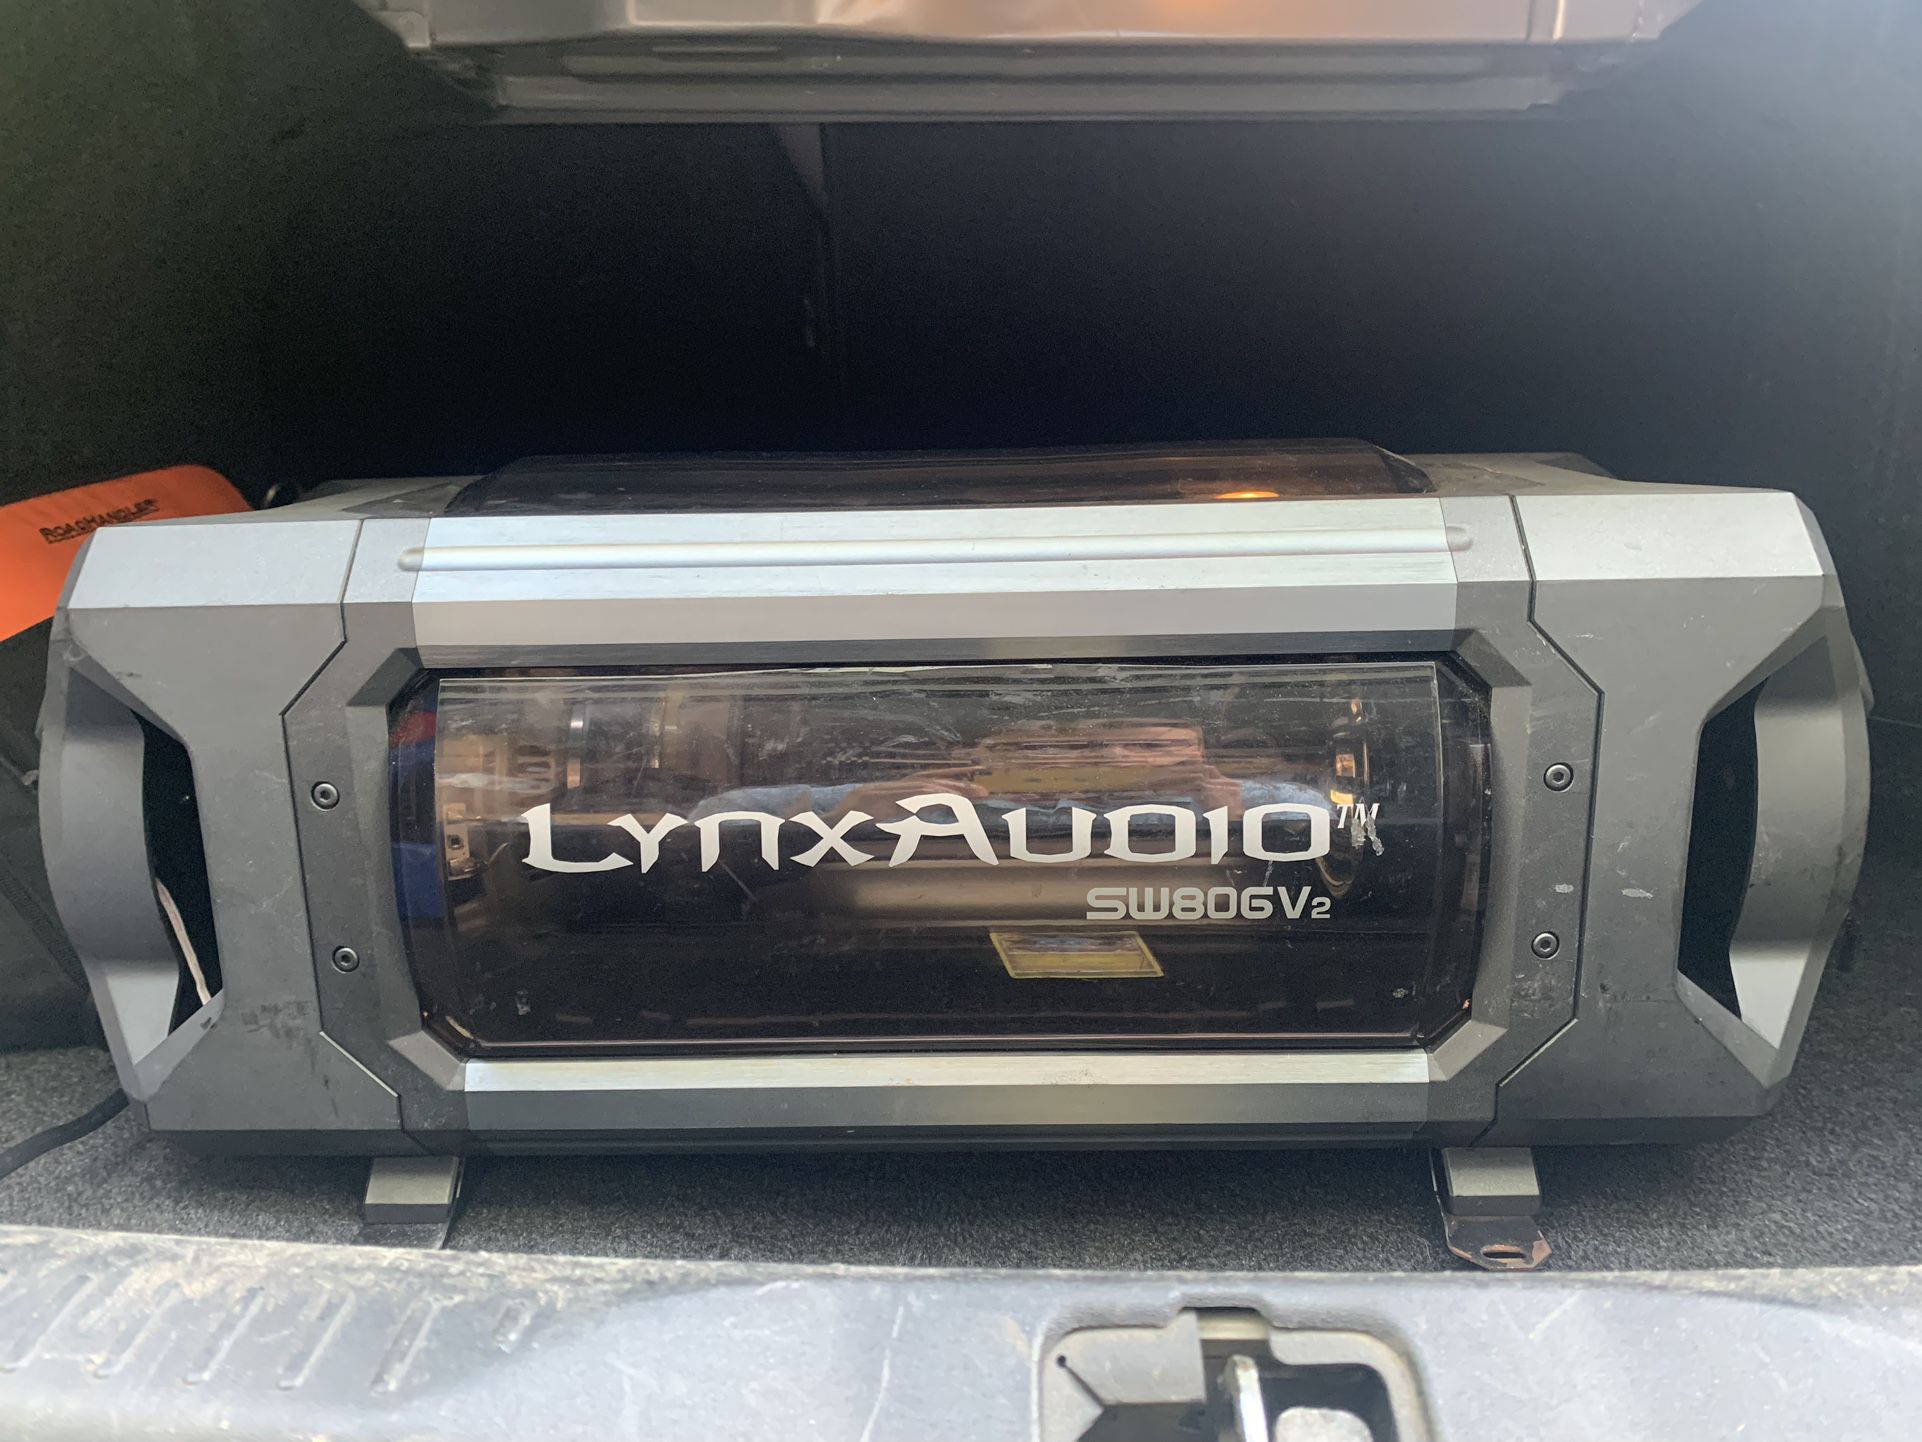 LynxAudio Vehicle Subwoofer